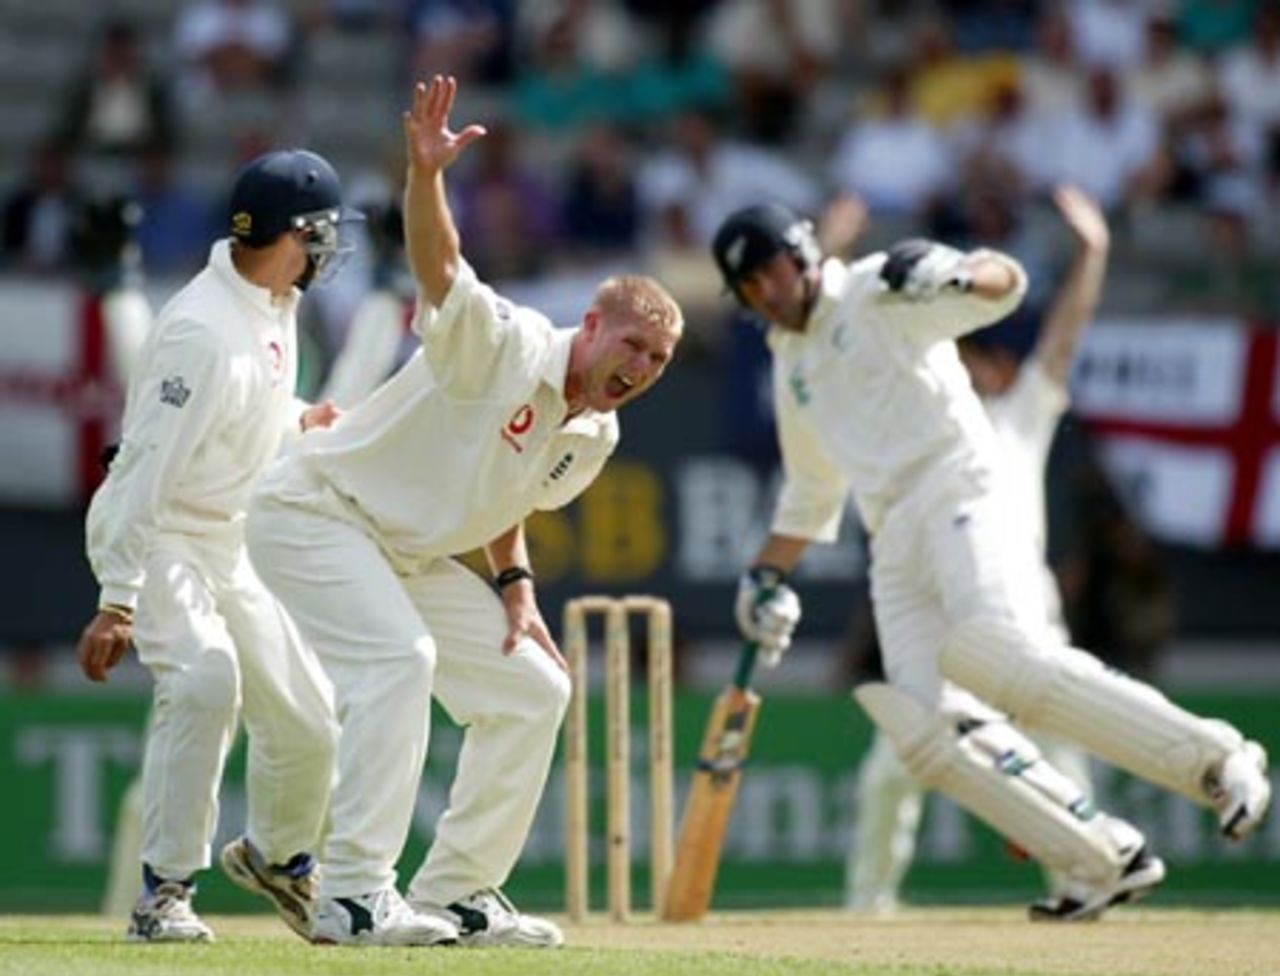 England bowler Matthew Hoggard (centre) unsuccessfully appeals for lbw against New Zealand batsman Stephen Fleming (right). Fielder Mark Ramprakash (left) looks on. 3rd Test: New Zealand v England at Eden Park, Auckland, 30 March-3 April 2002 (30 March 2002).